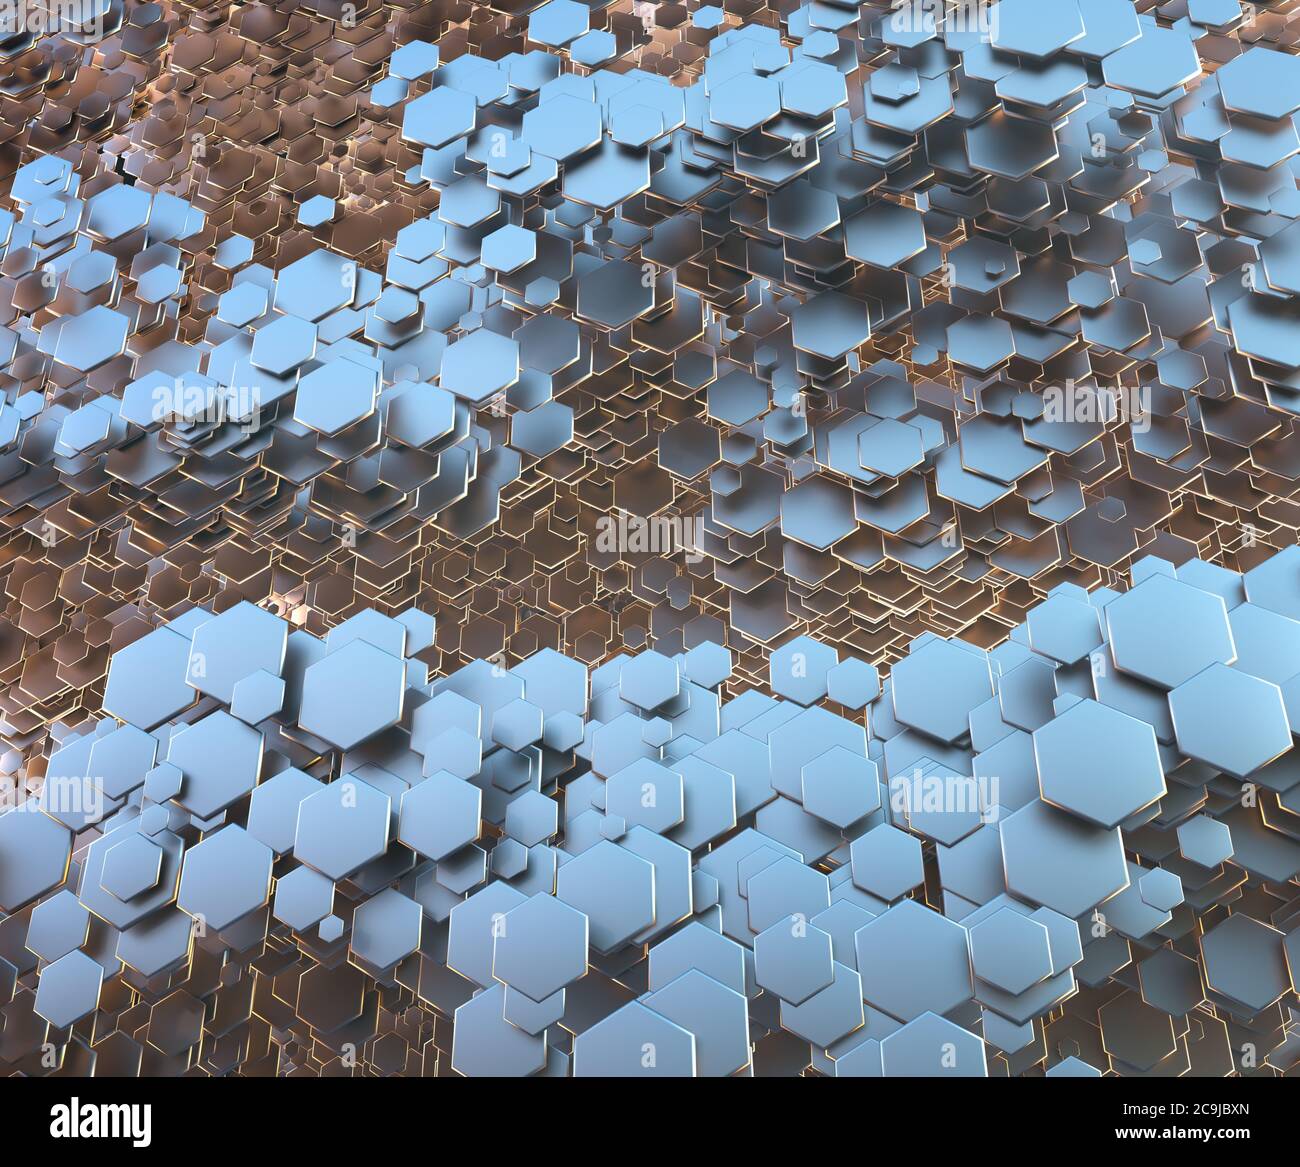 Abstract background of polygonal metallic honeycomb, illustration. Stock Photo